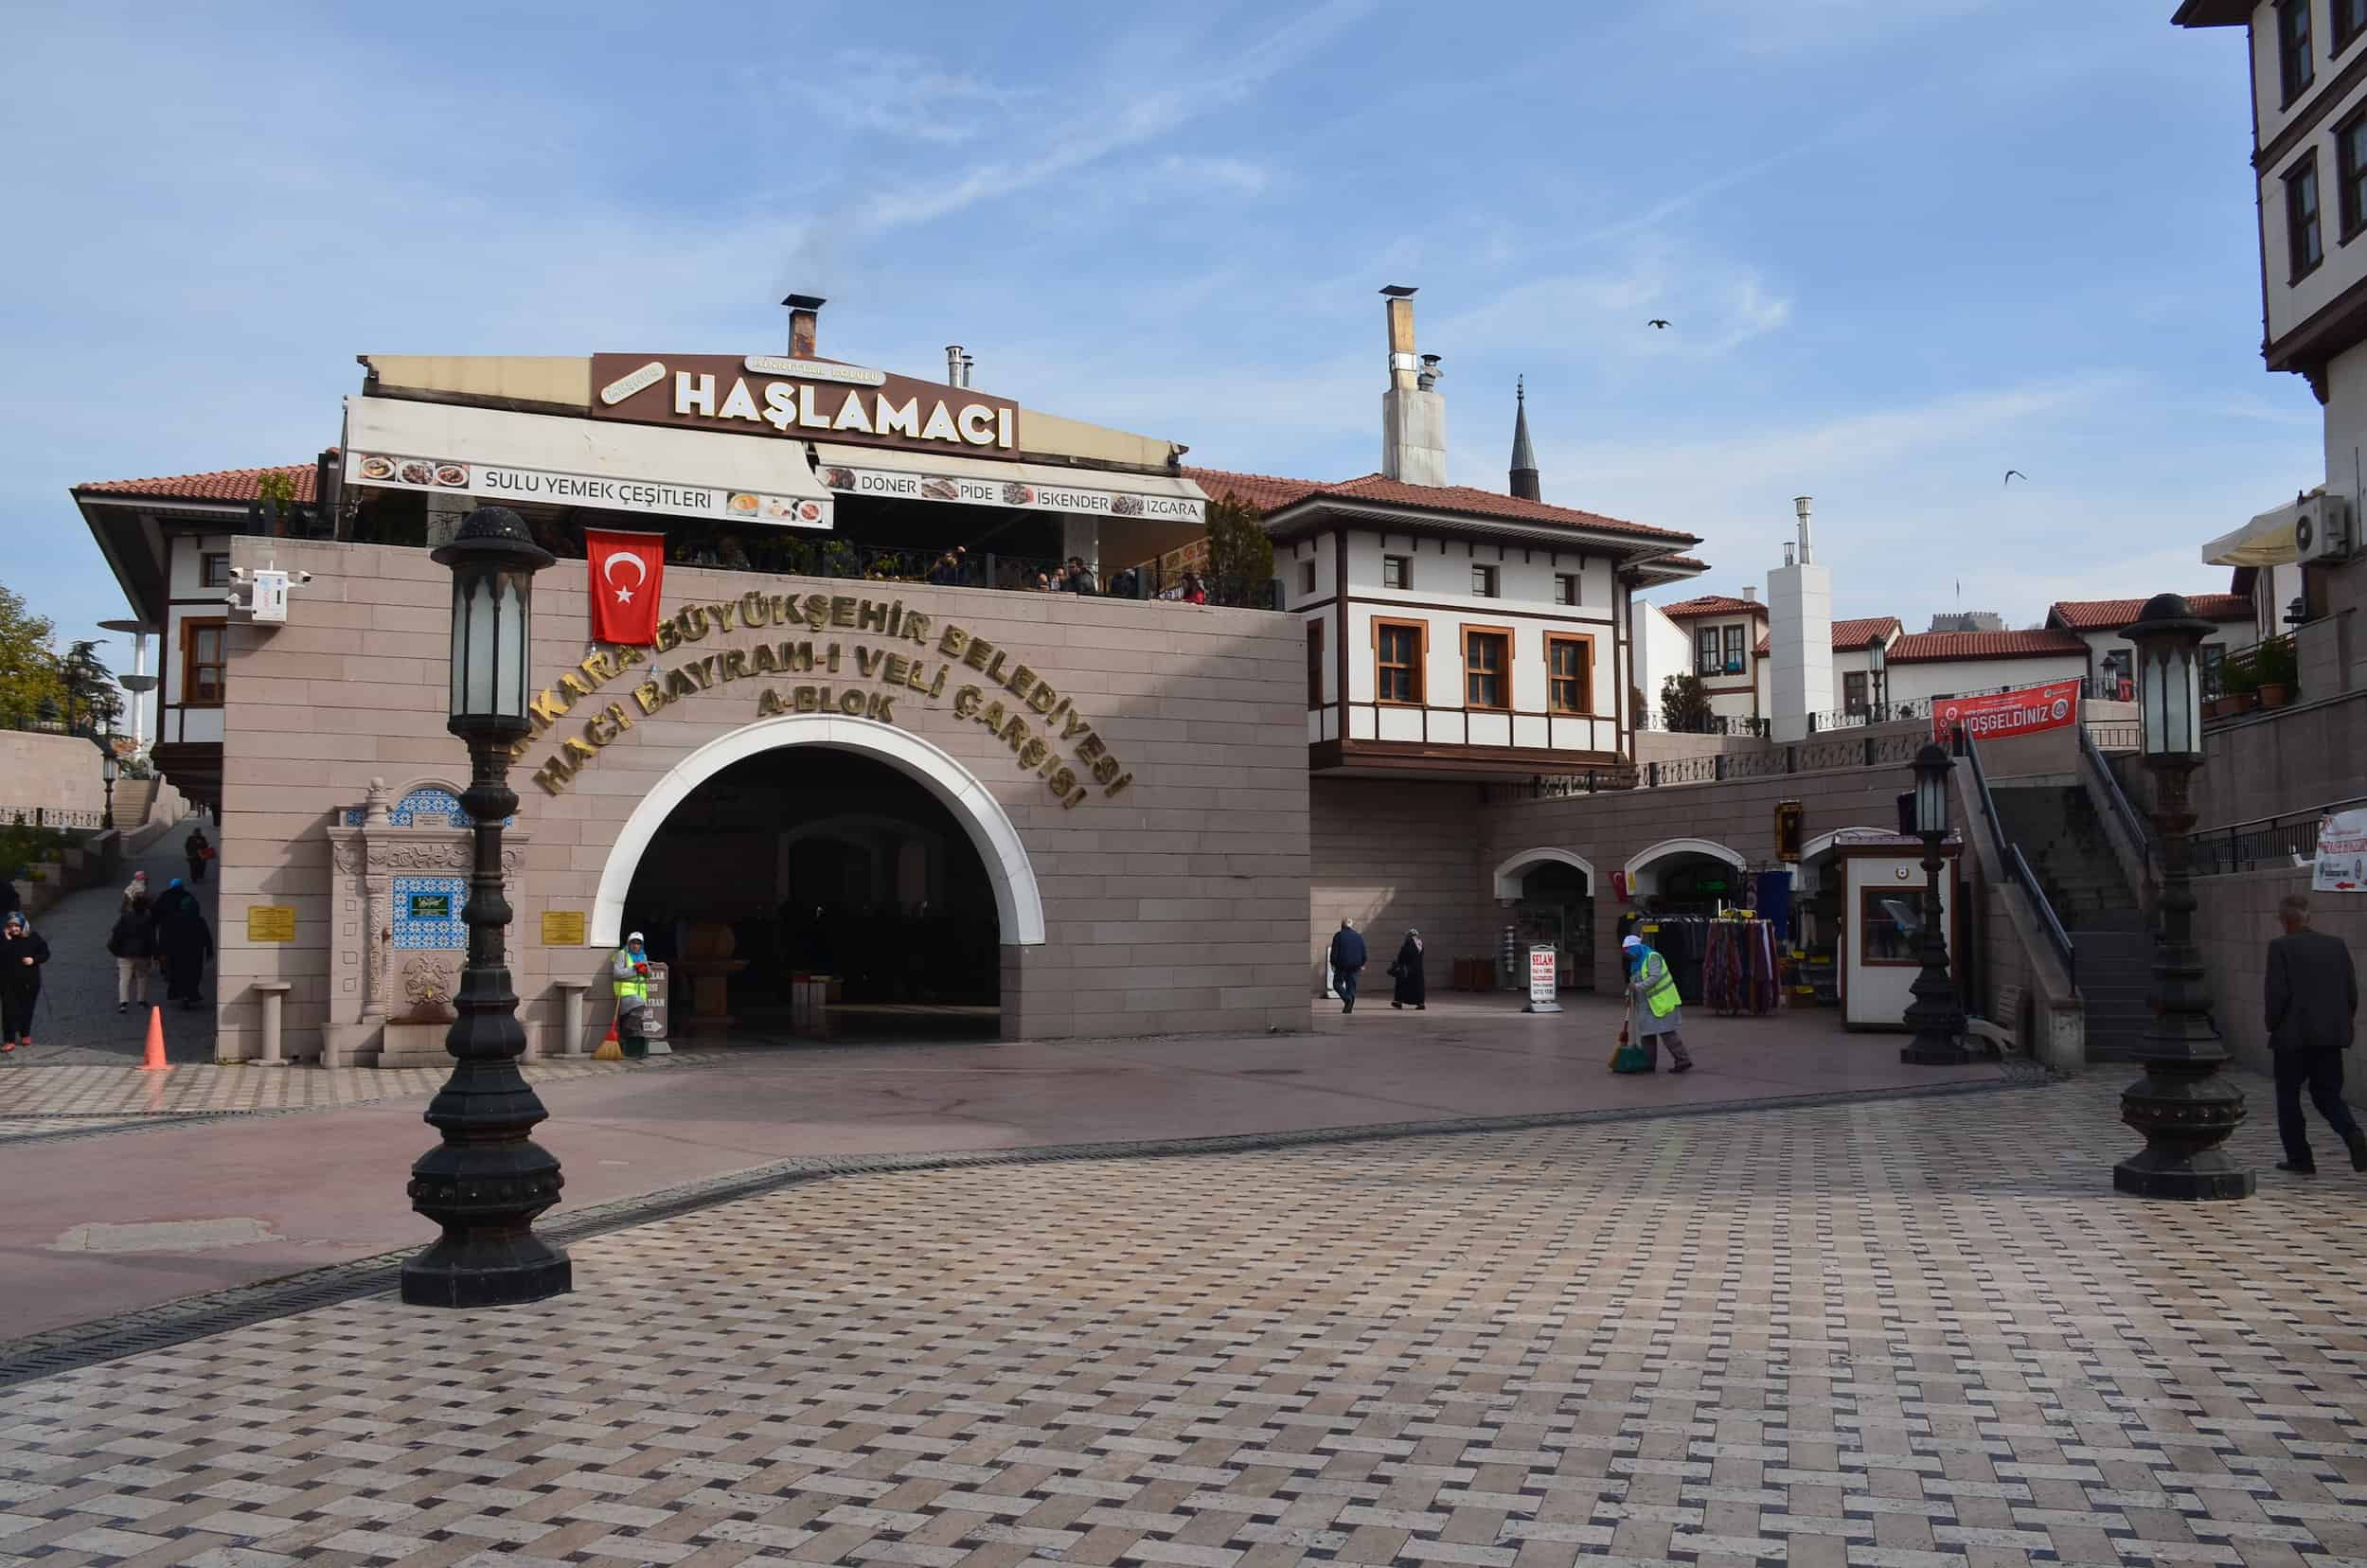 Entrance to a bazaar in Hacıbayram, Ulus, Ankara, Turkey